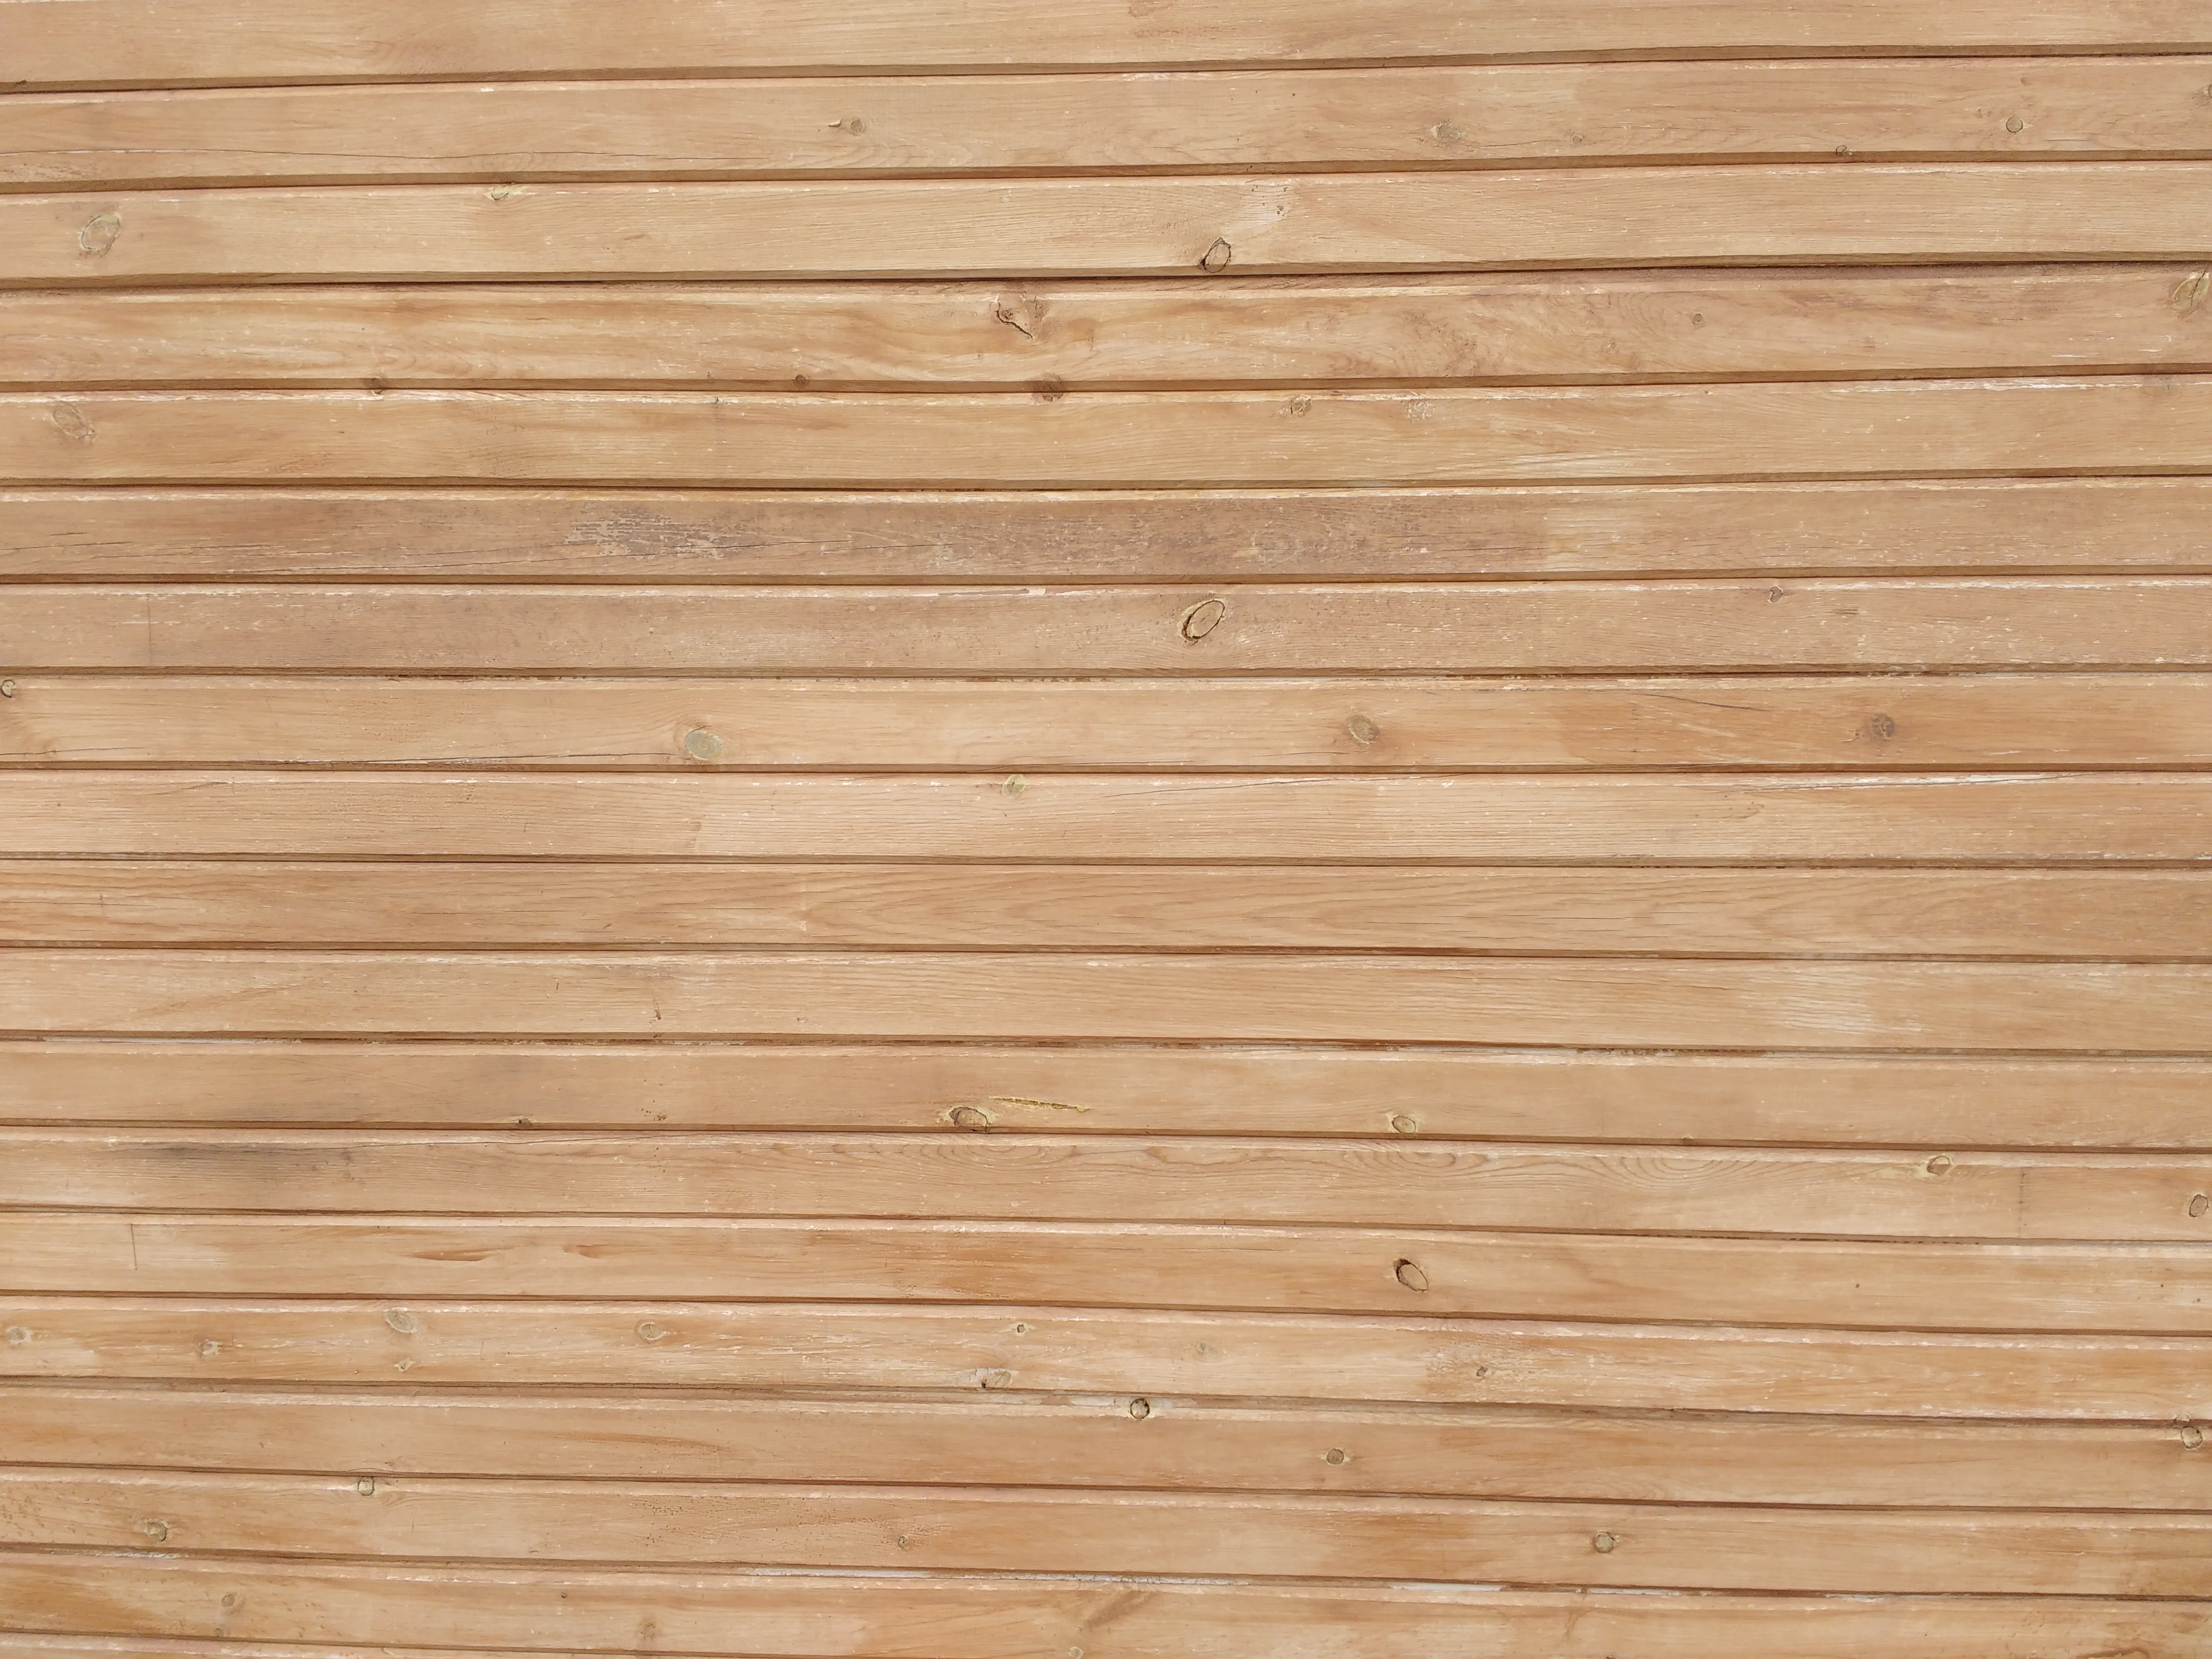 Horizontal Wood Plank Texture Picture | Free Photograph | Photos Public